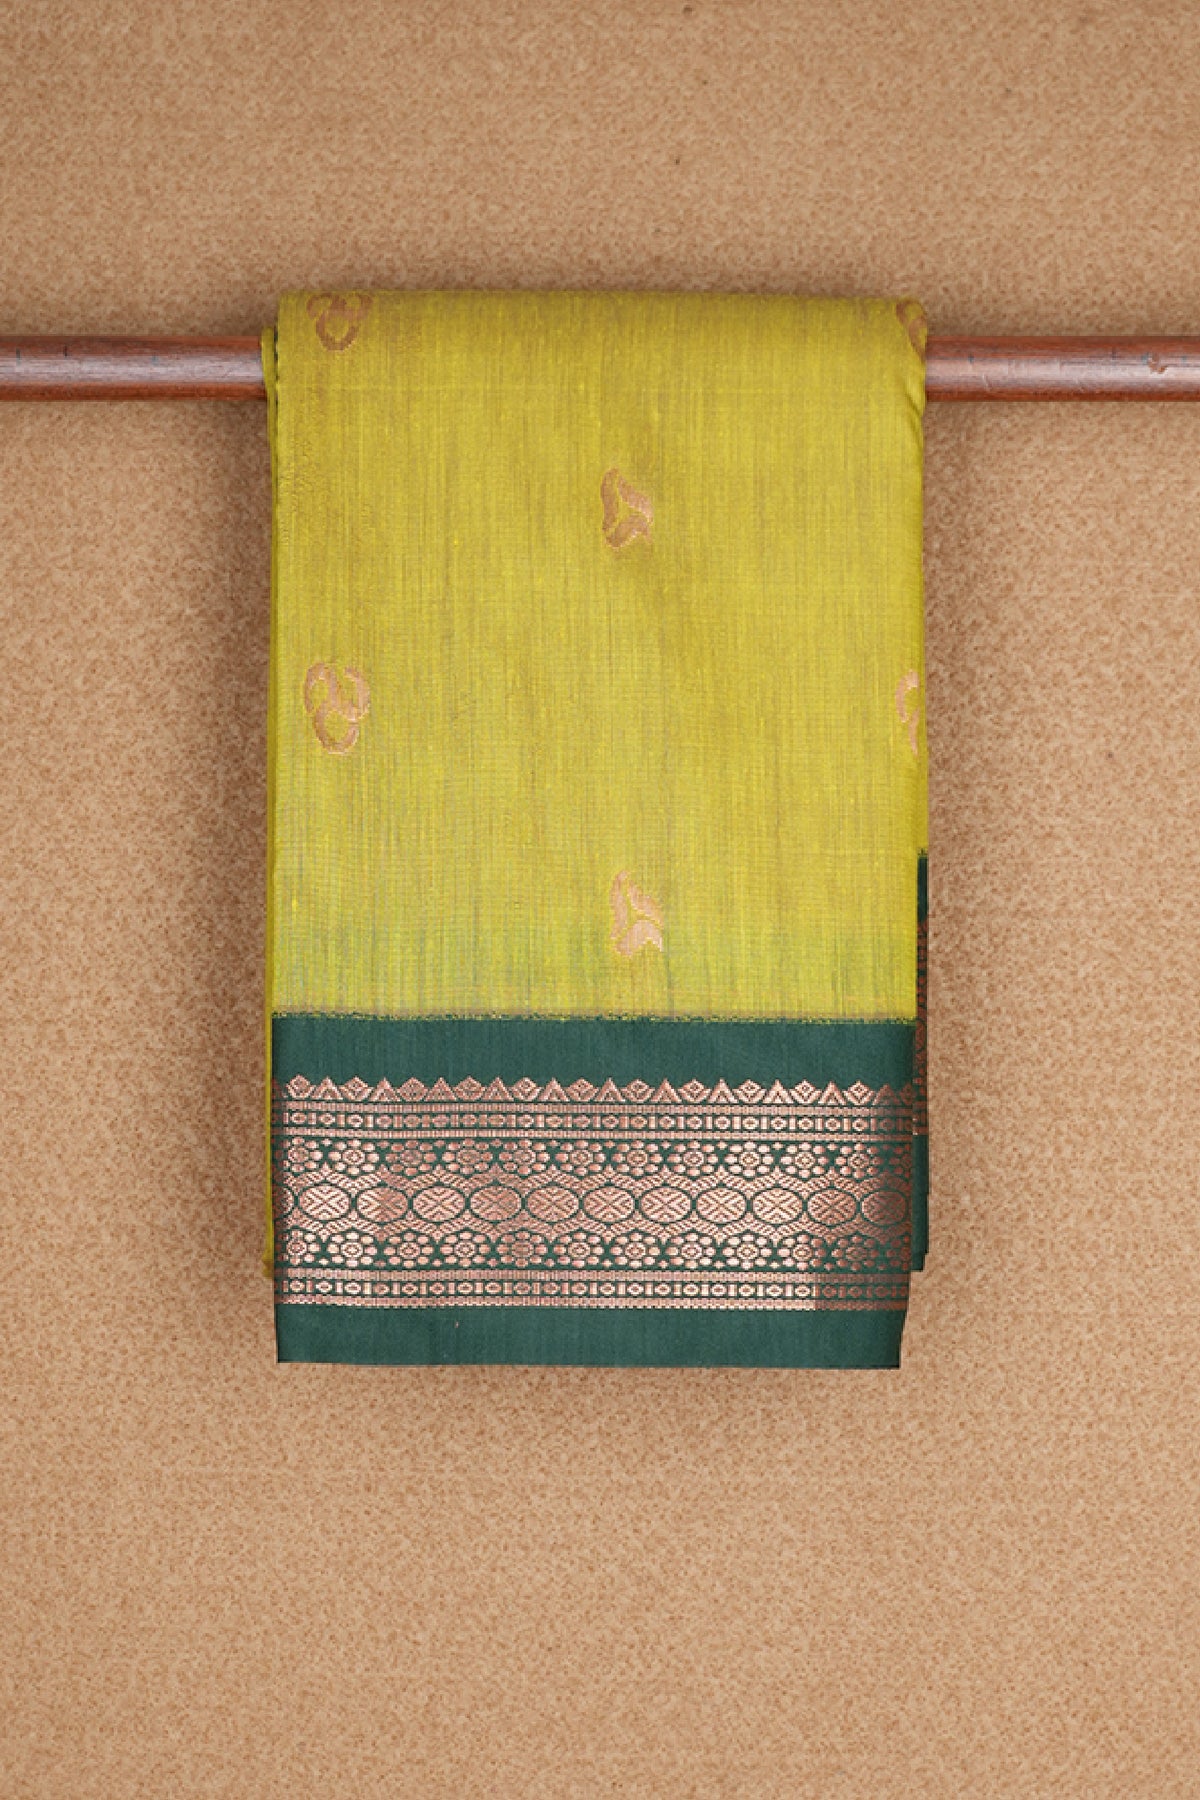 Rudraksh Floral Border Pear Green Apoorva Semi Silk Saree